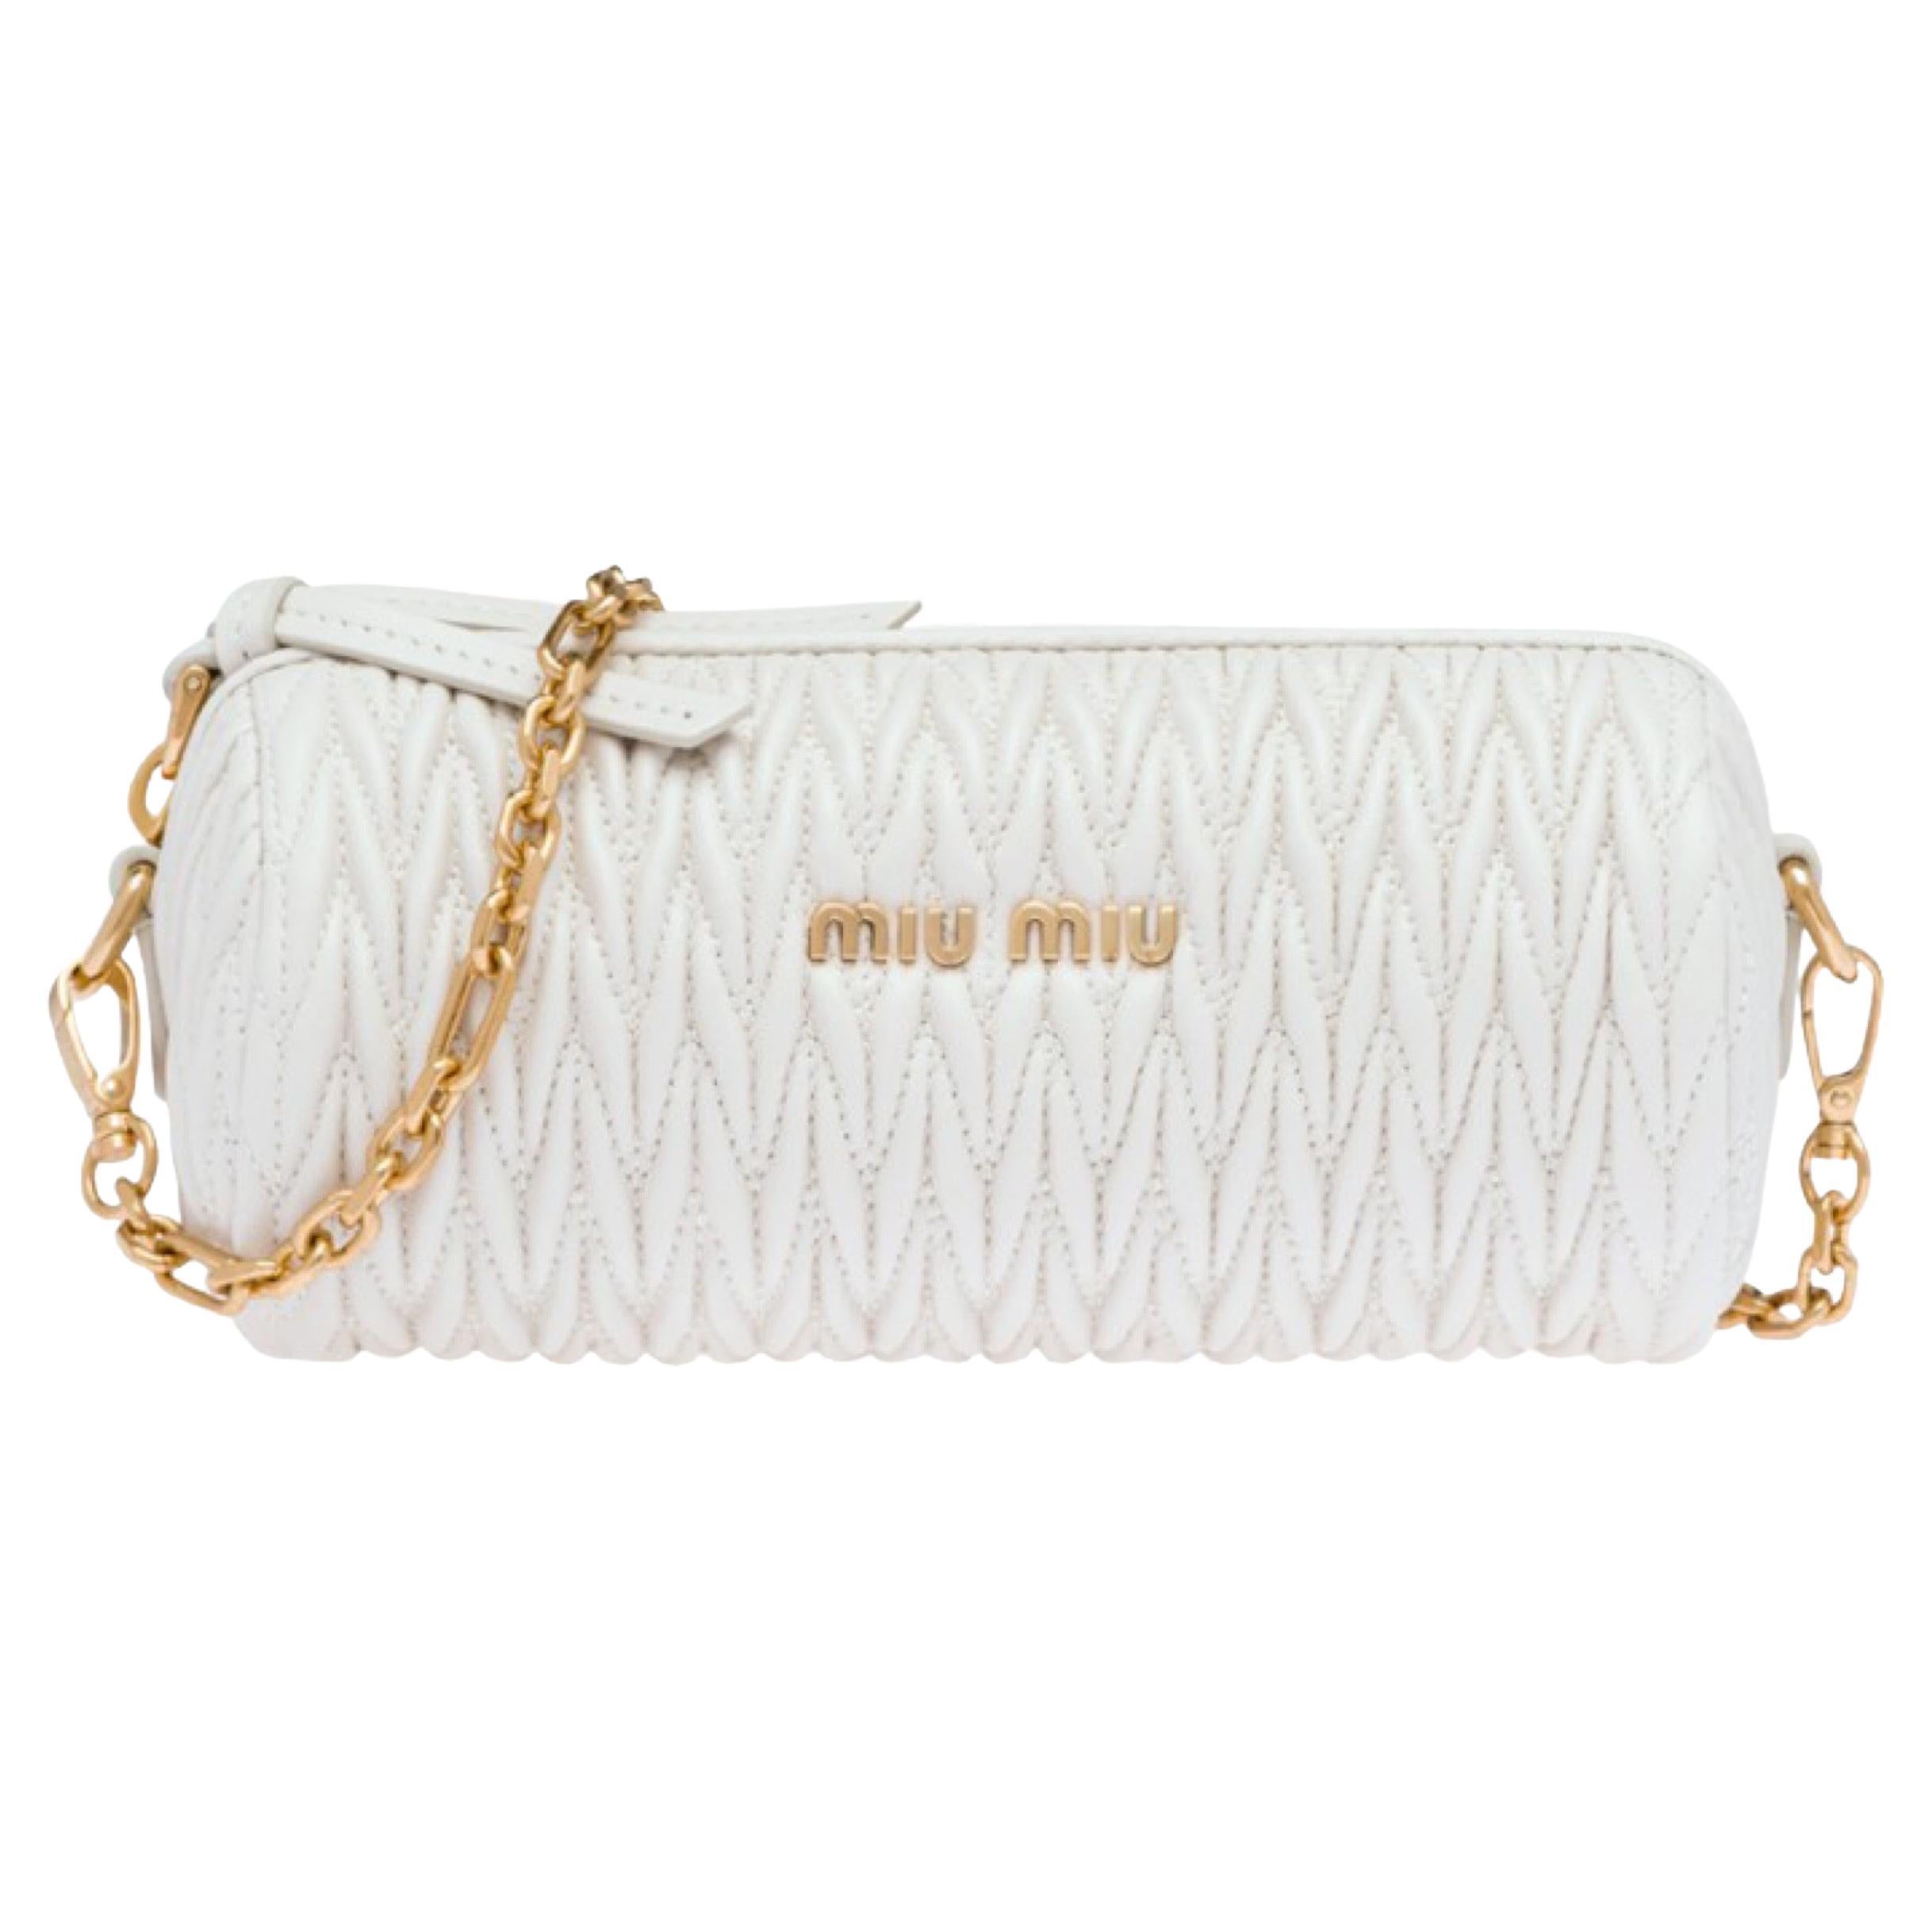 NEW Miu Miu White Matelasse Nappa Leather Shoulder Bag For Sale